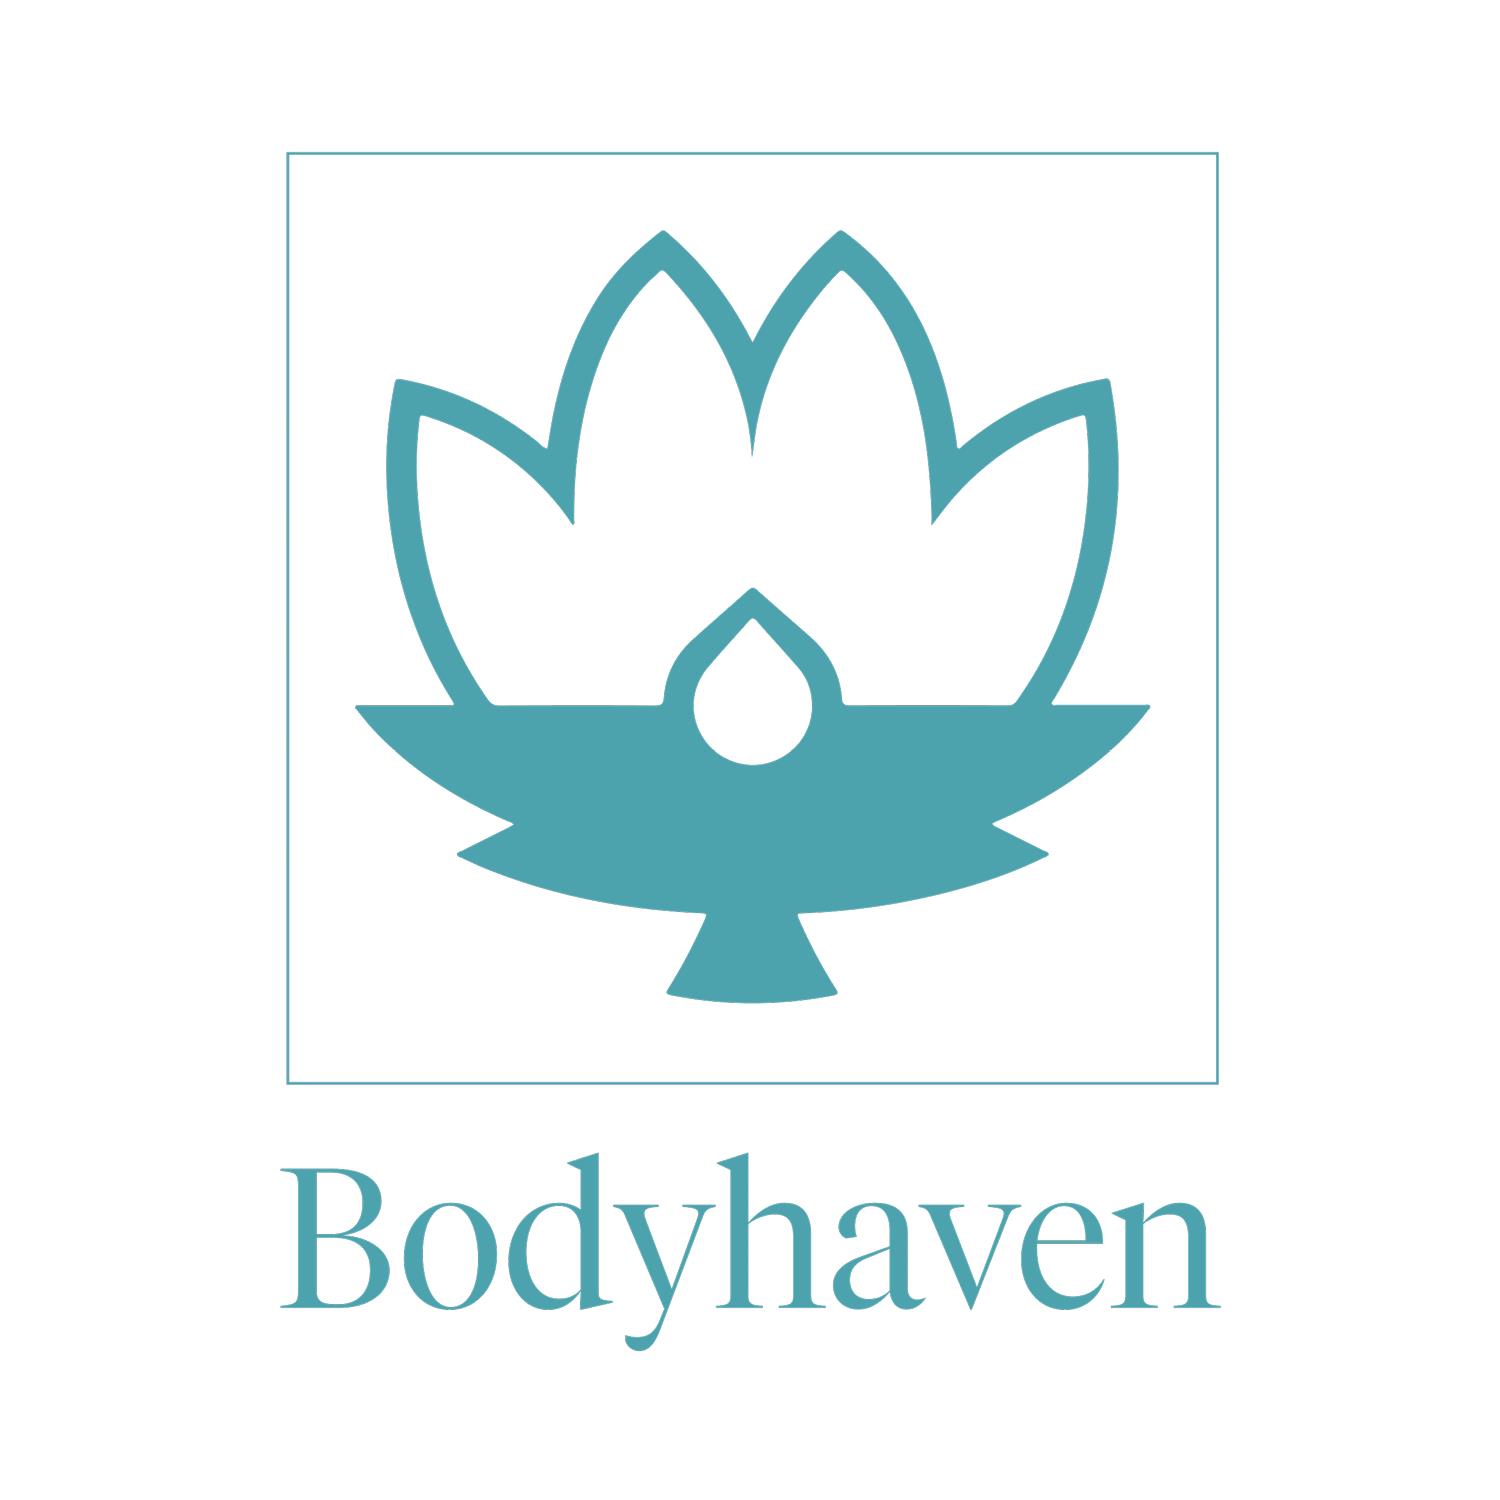 Bodyhaven Spa Style Boutique